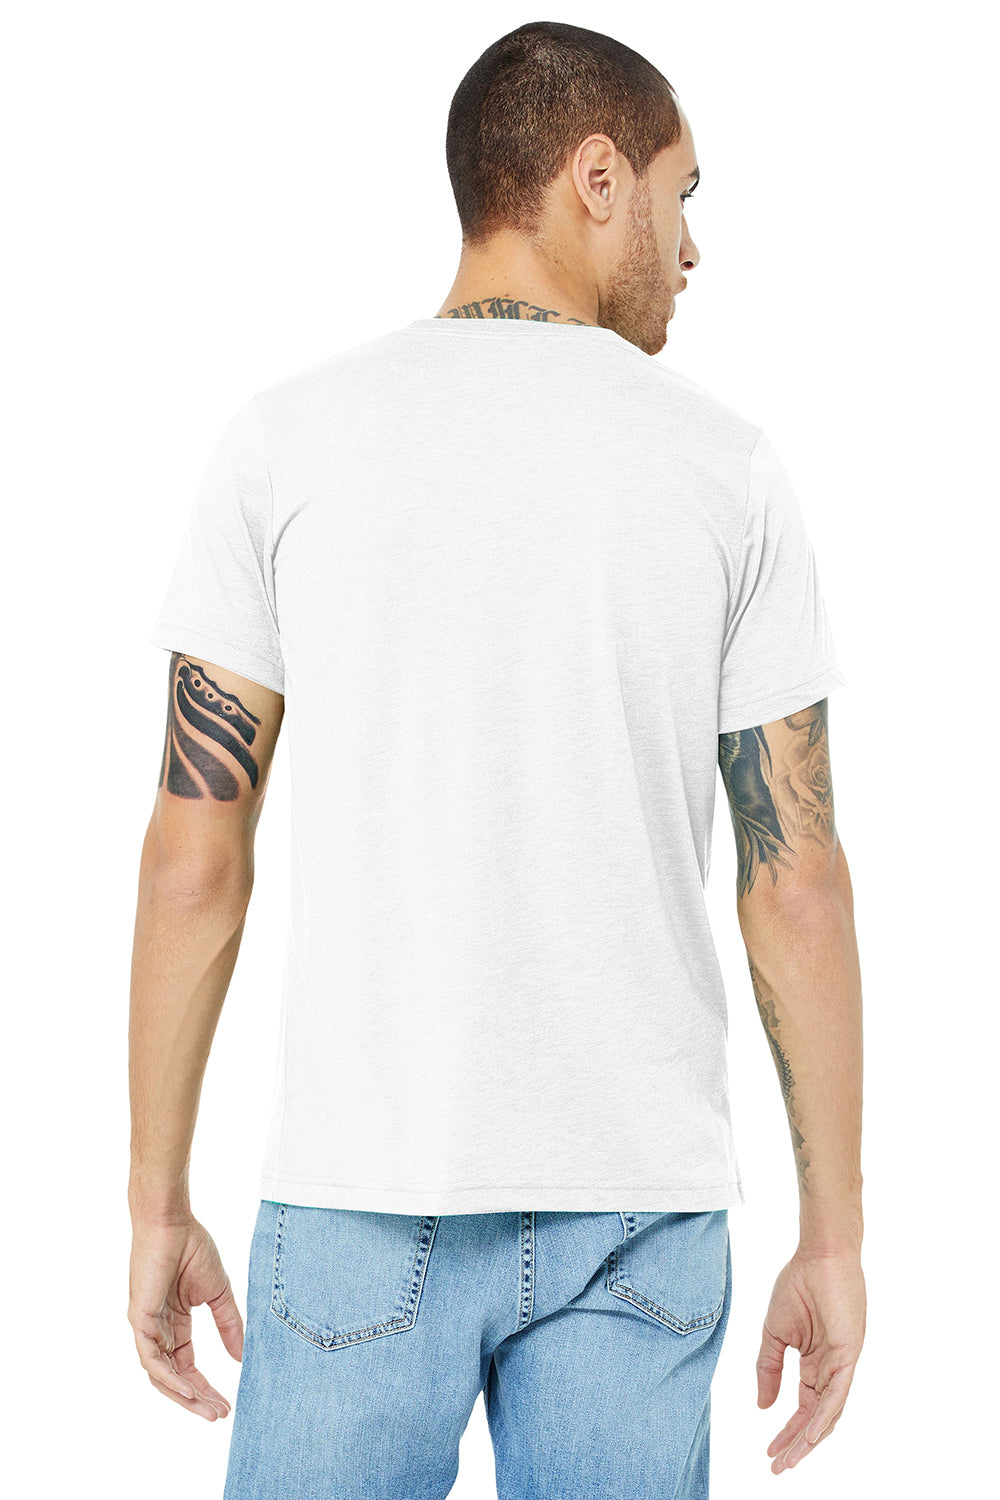 Bella + Canvas BC3413/3413C/3413 Mens Short Sleeve Crewneck T-Shirt Solid White Model Back